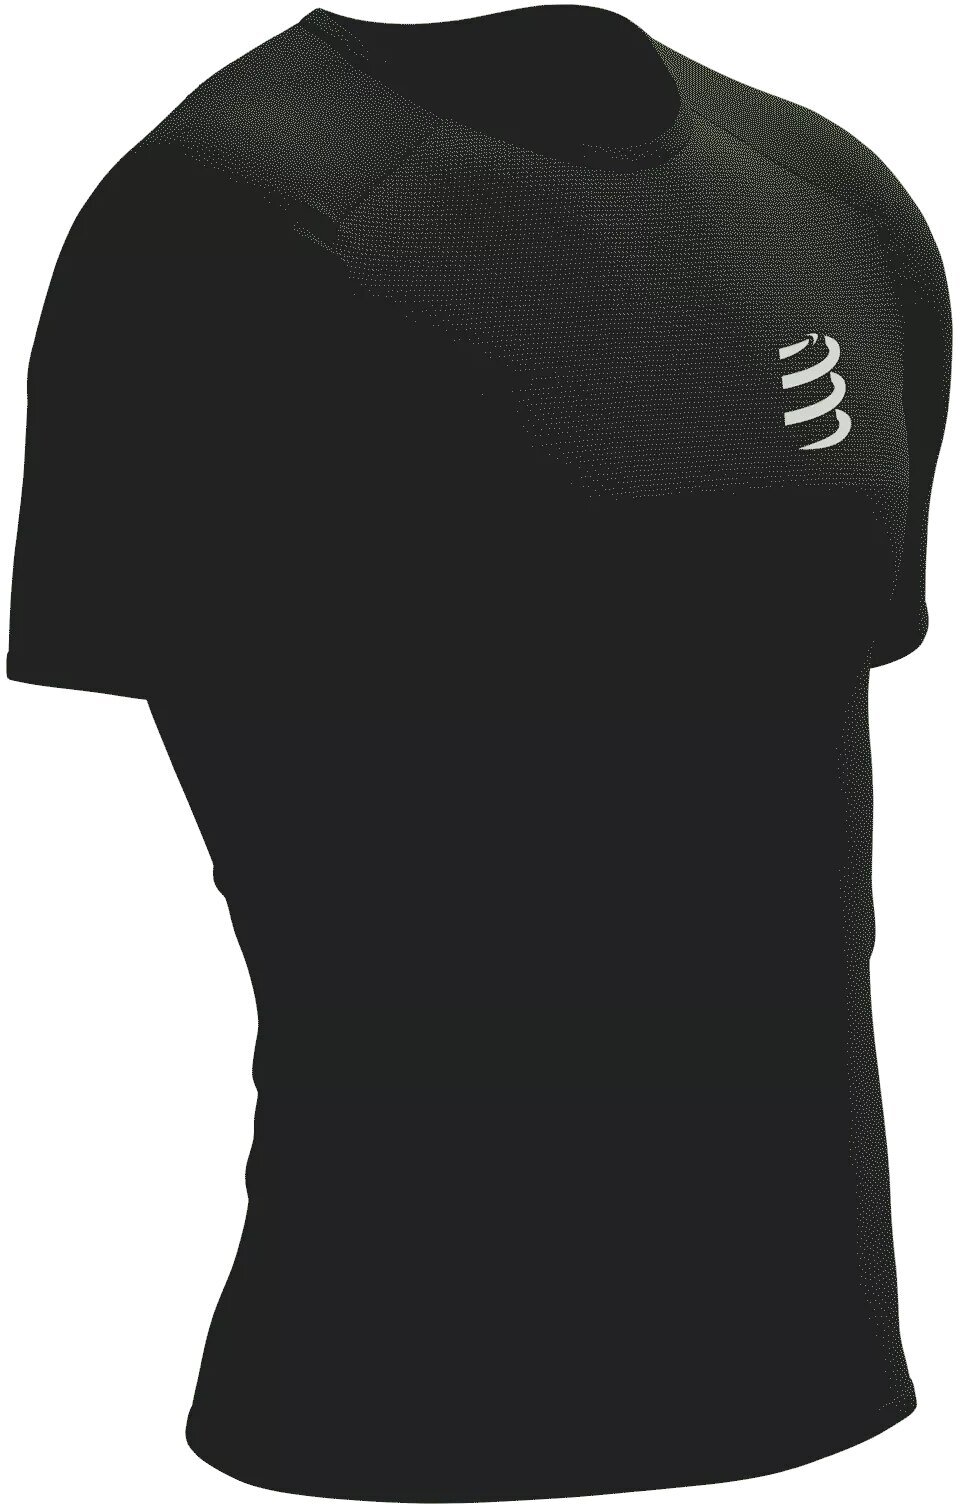 Laufshirt mit Kurzarm
 Compressport Performance SS Tshirt M Black/White S Laufshirt mit Kurzarm